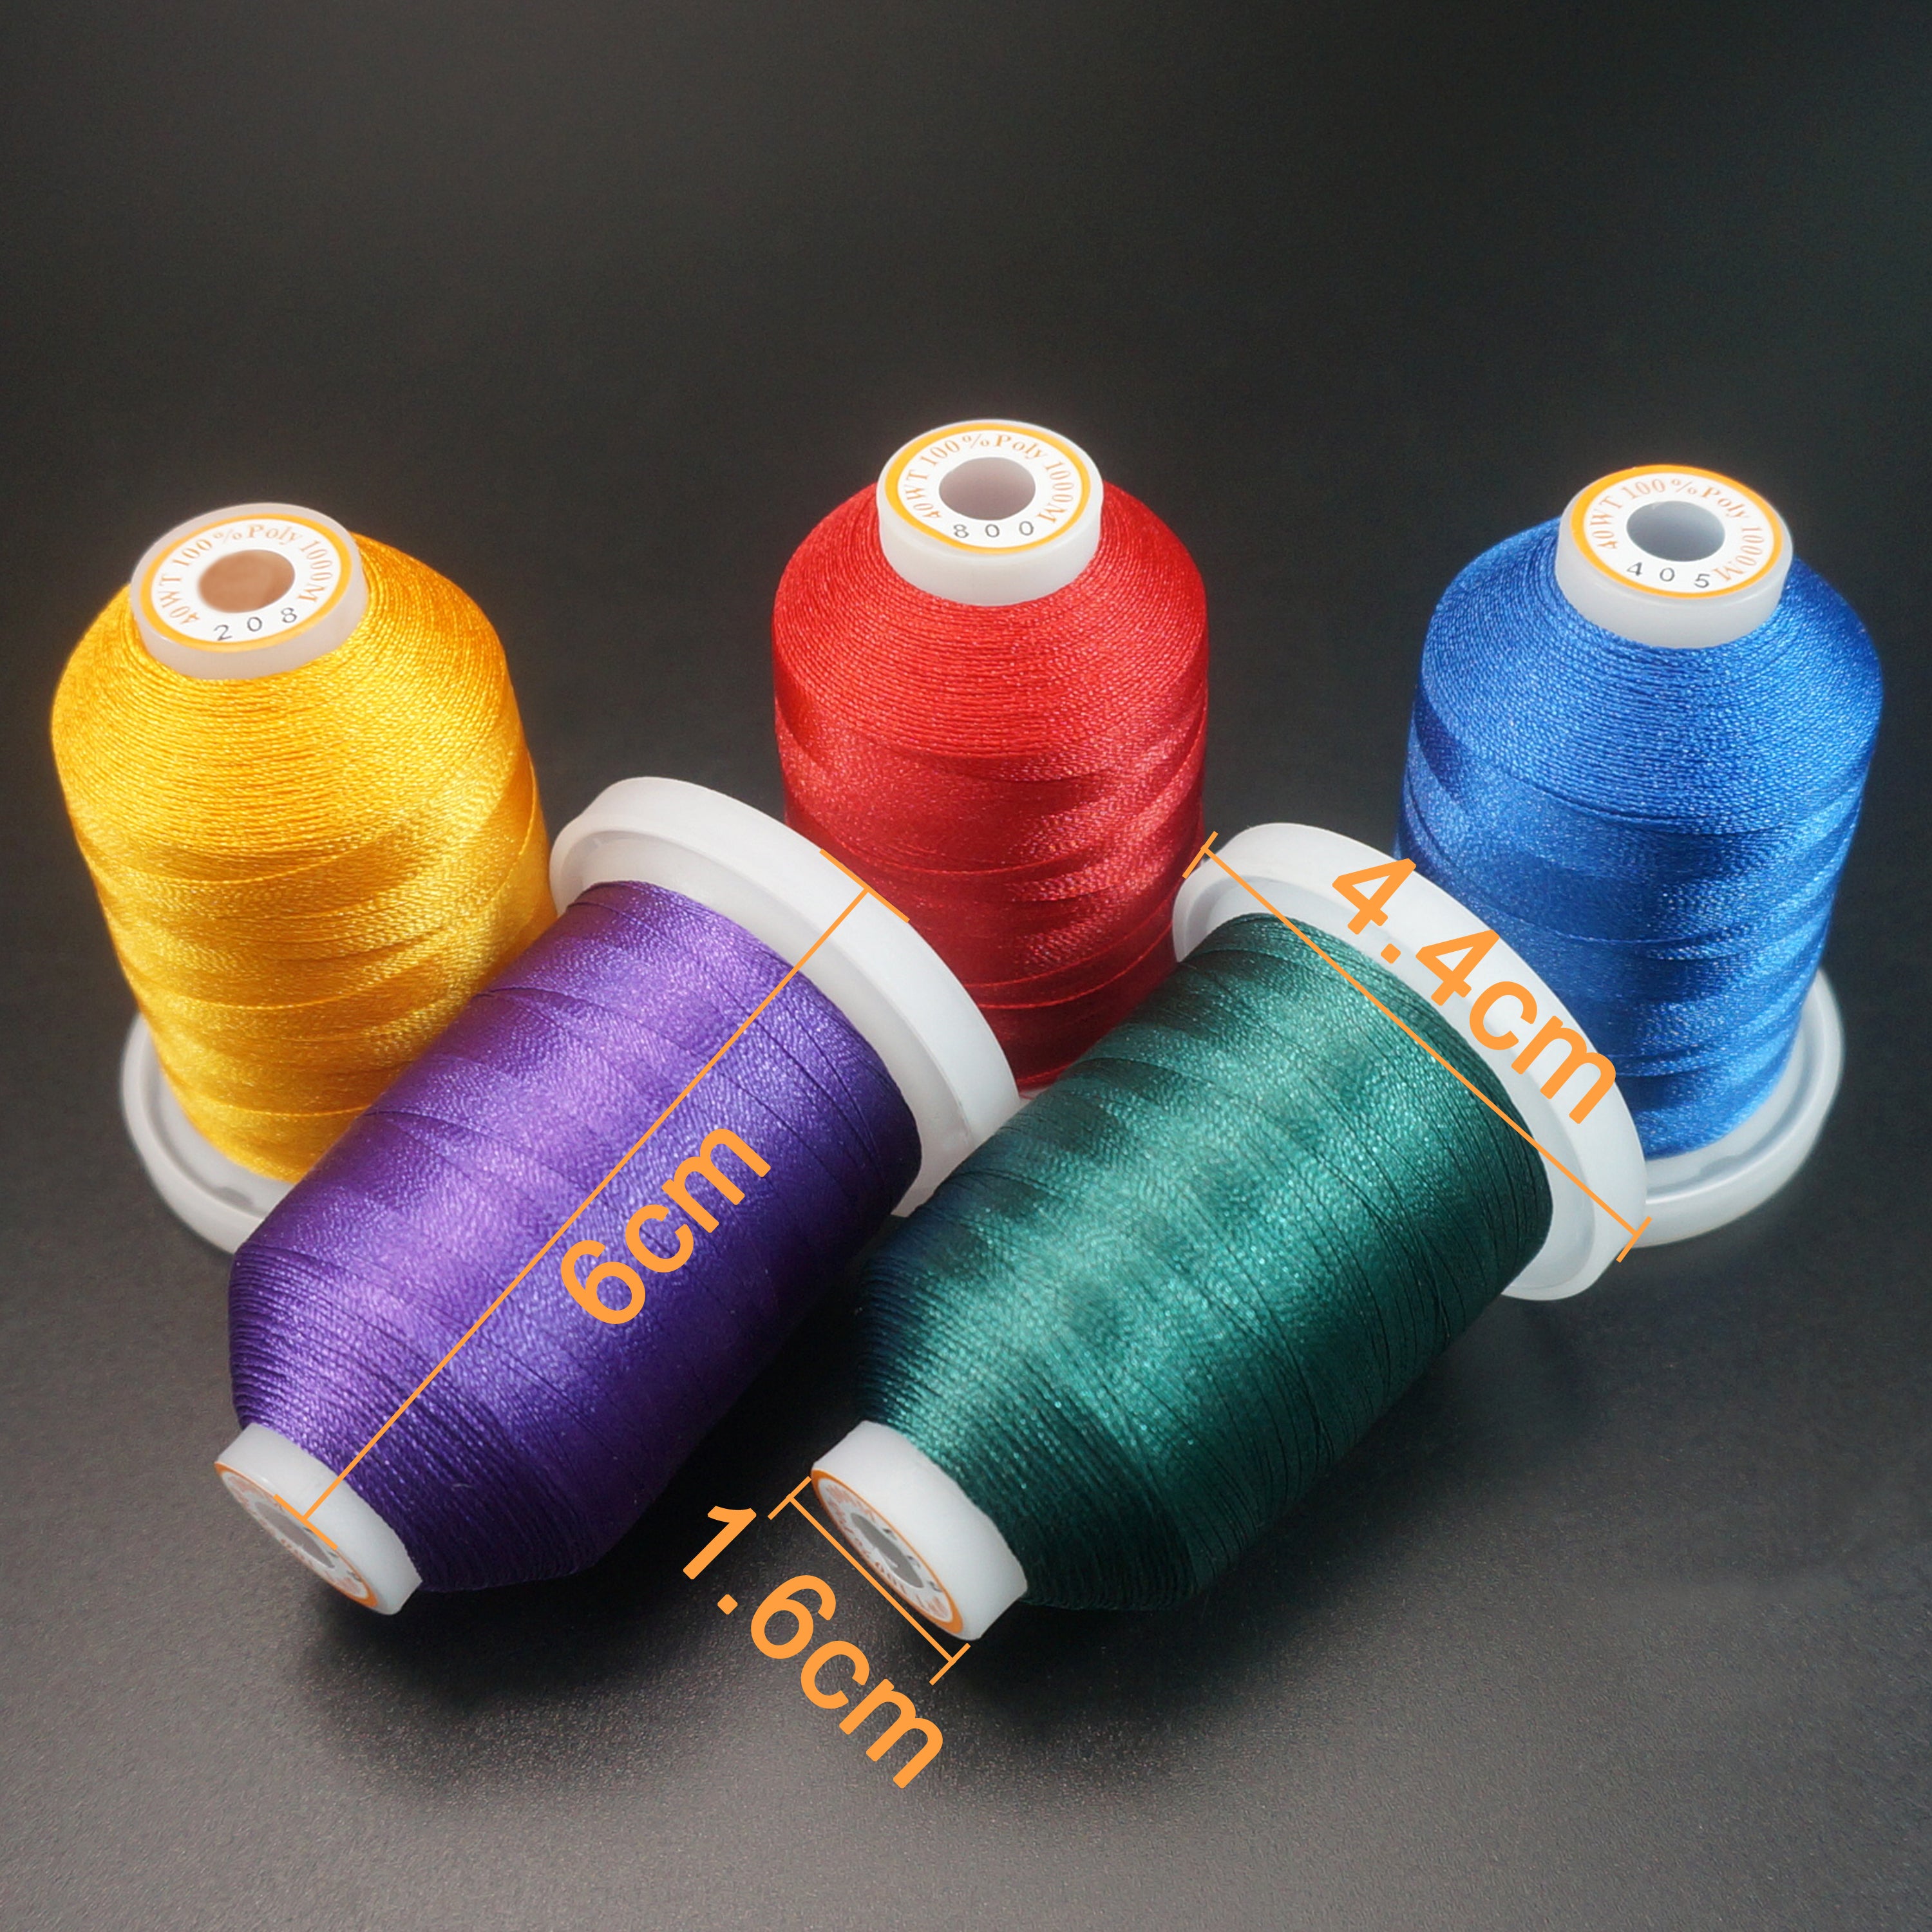 New brothread Single Spool 1000M Each Polyester Embroidery Machine Thr